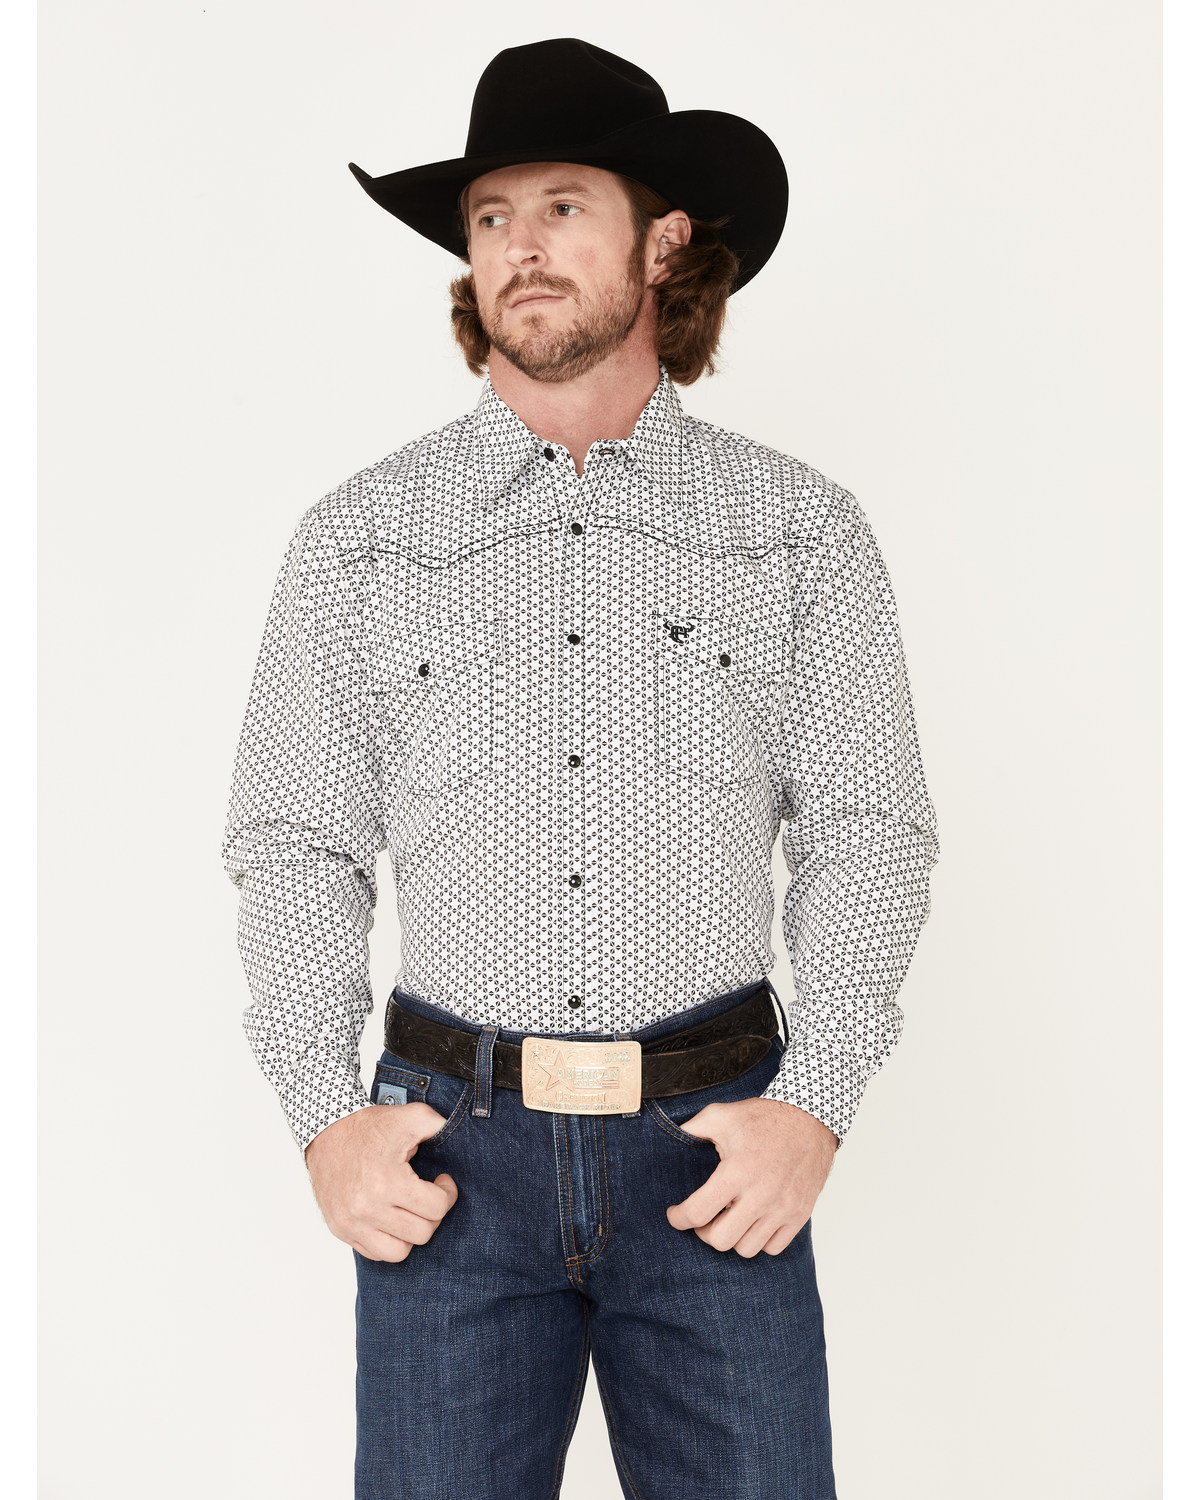 Cowboy Hardware Men's Six Star Geo Print Snap Western Shirt